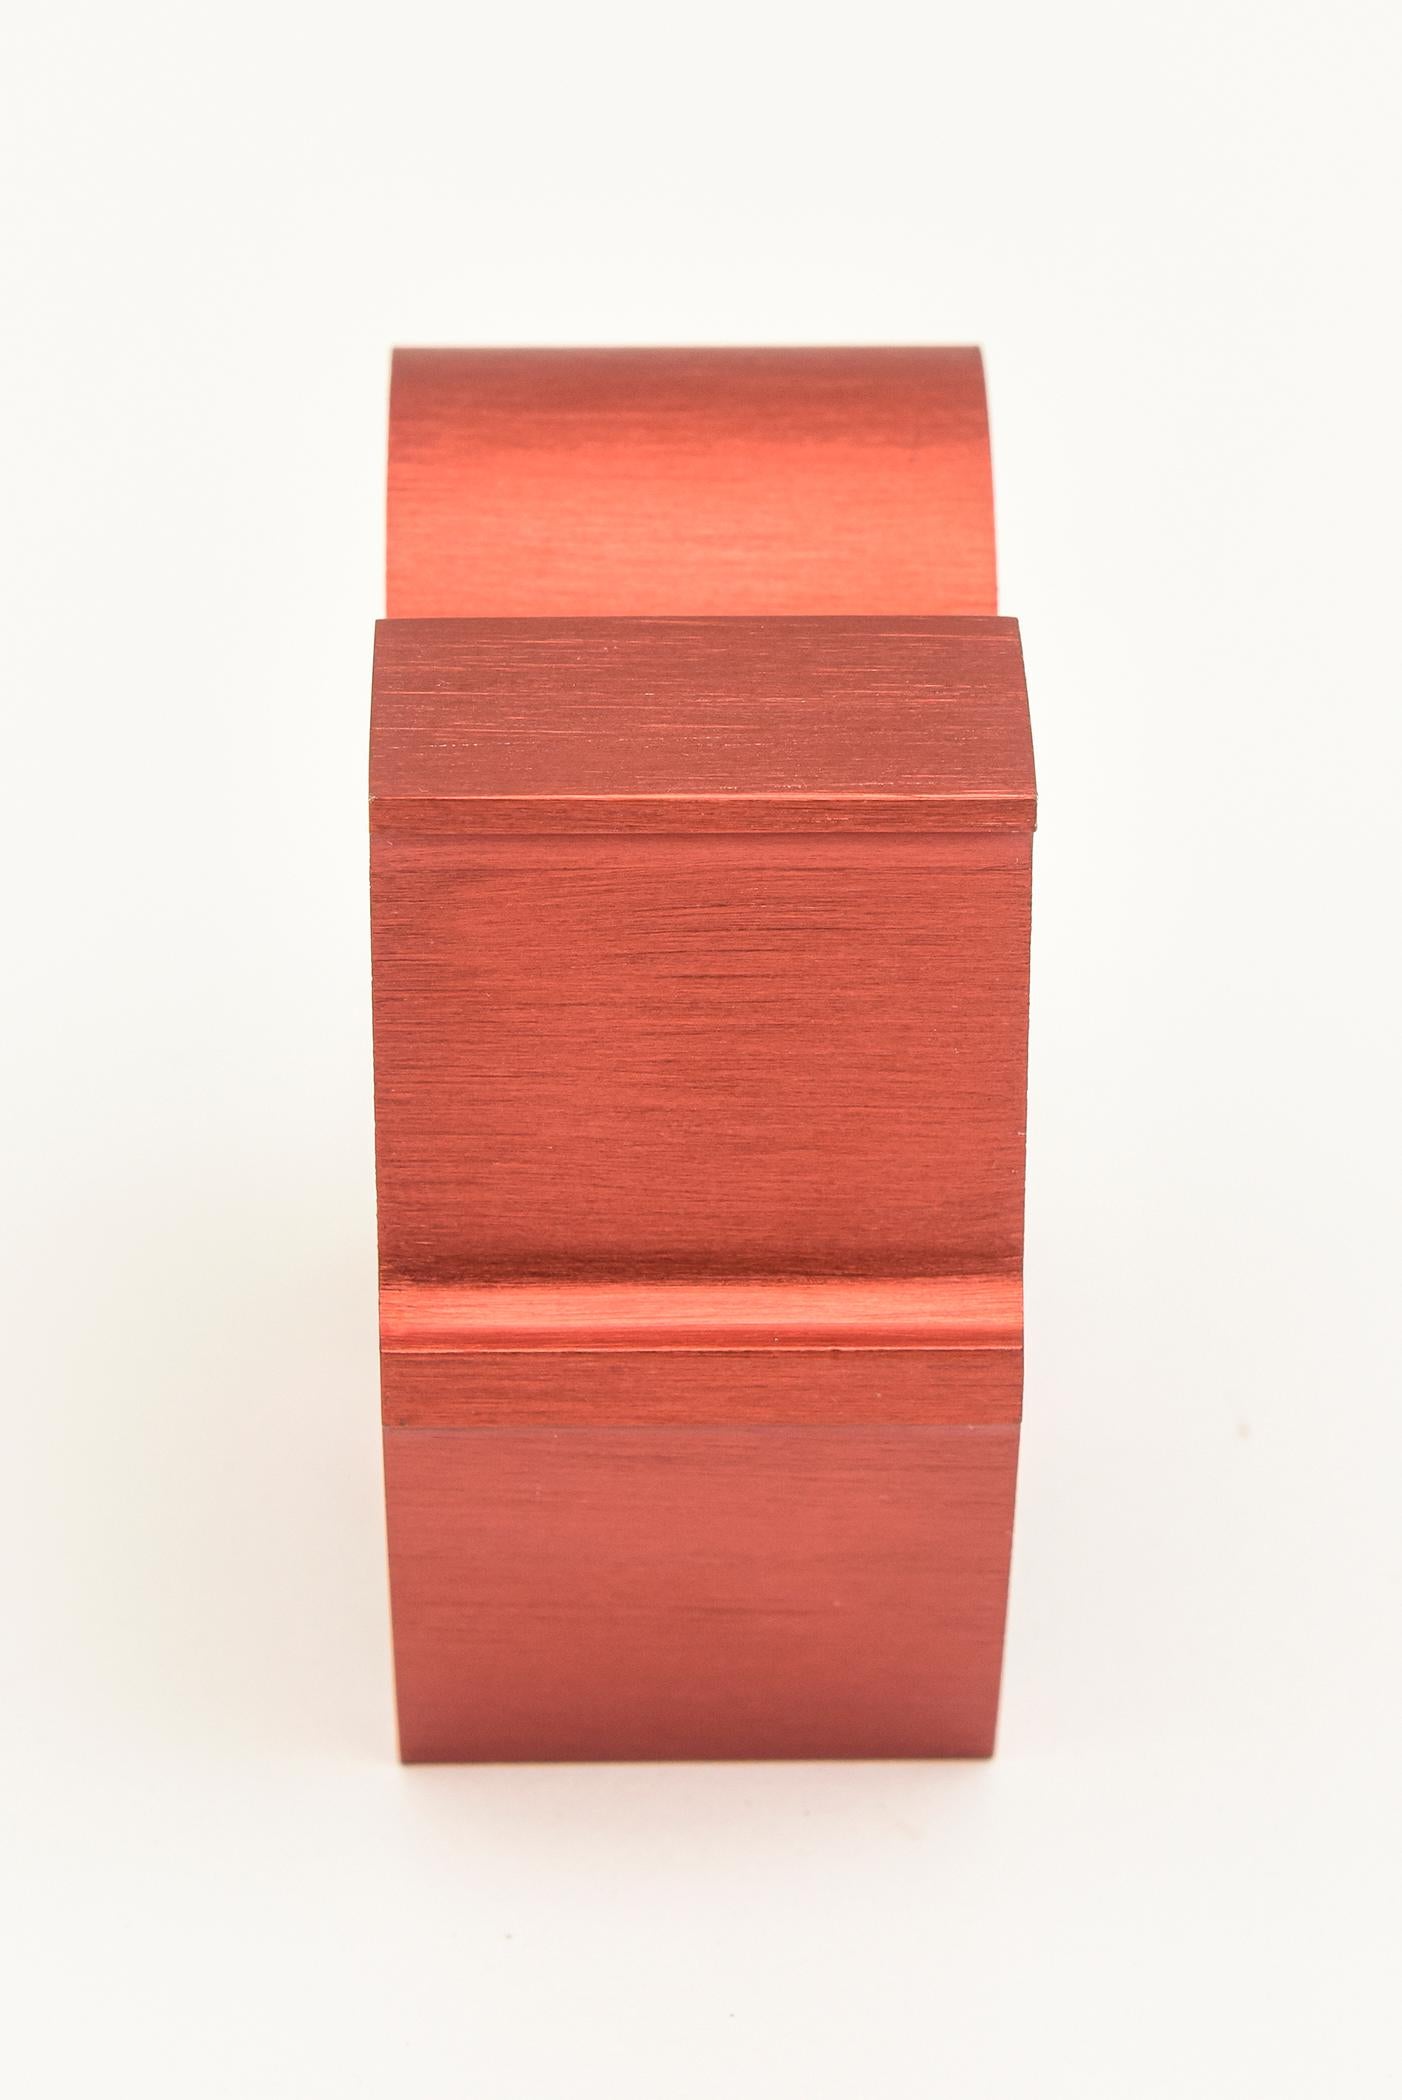 Accessoire de bureau de Robert Indiana en aluminium brossé rouge Love Paperweight sculpture en vente 1